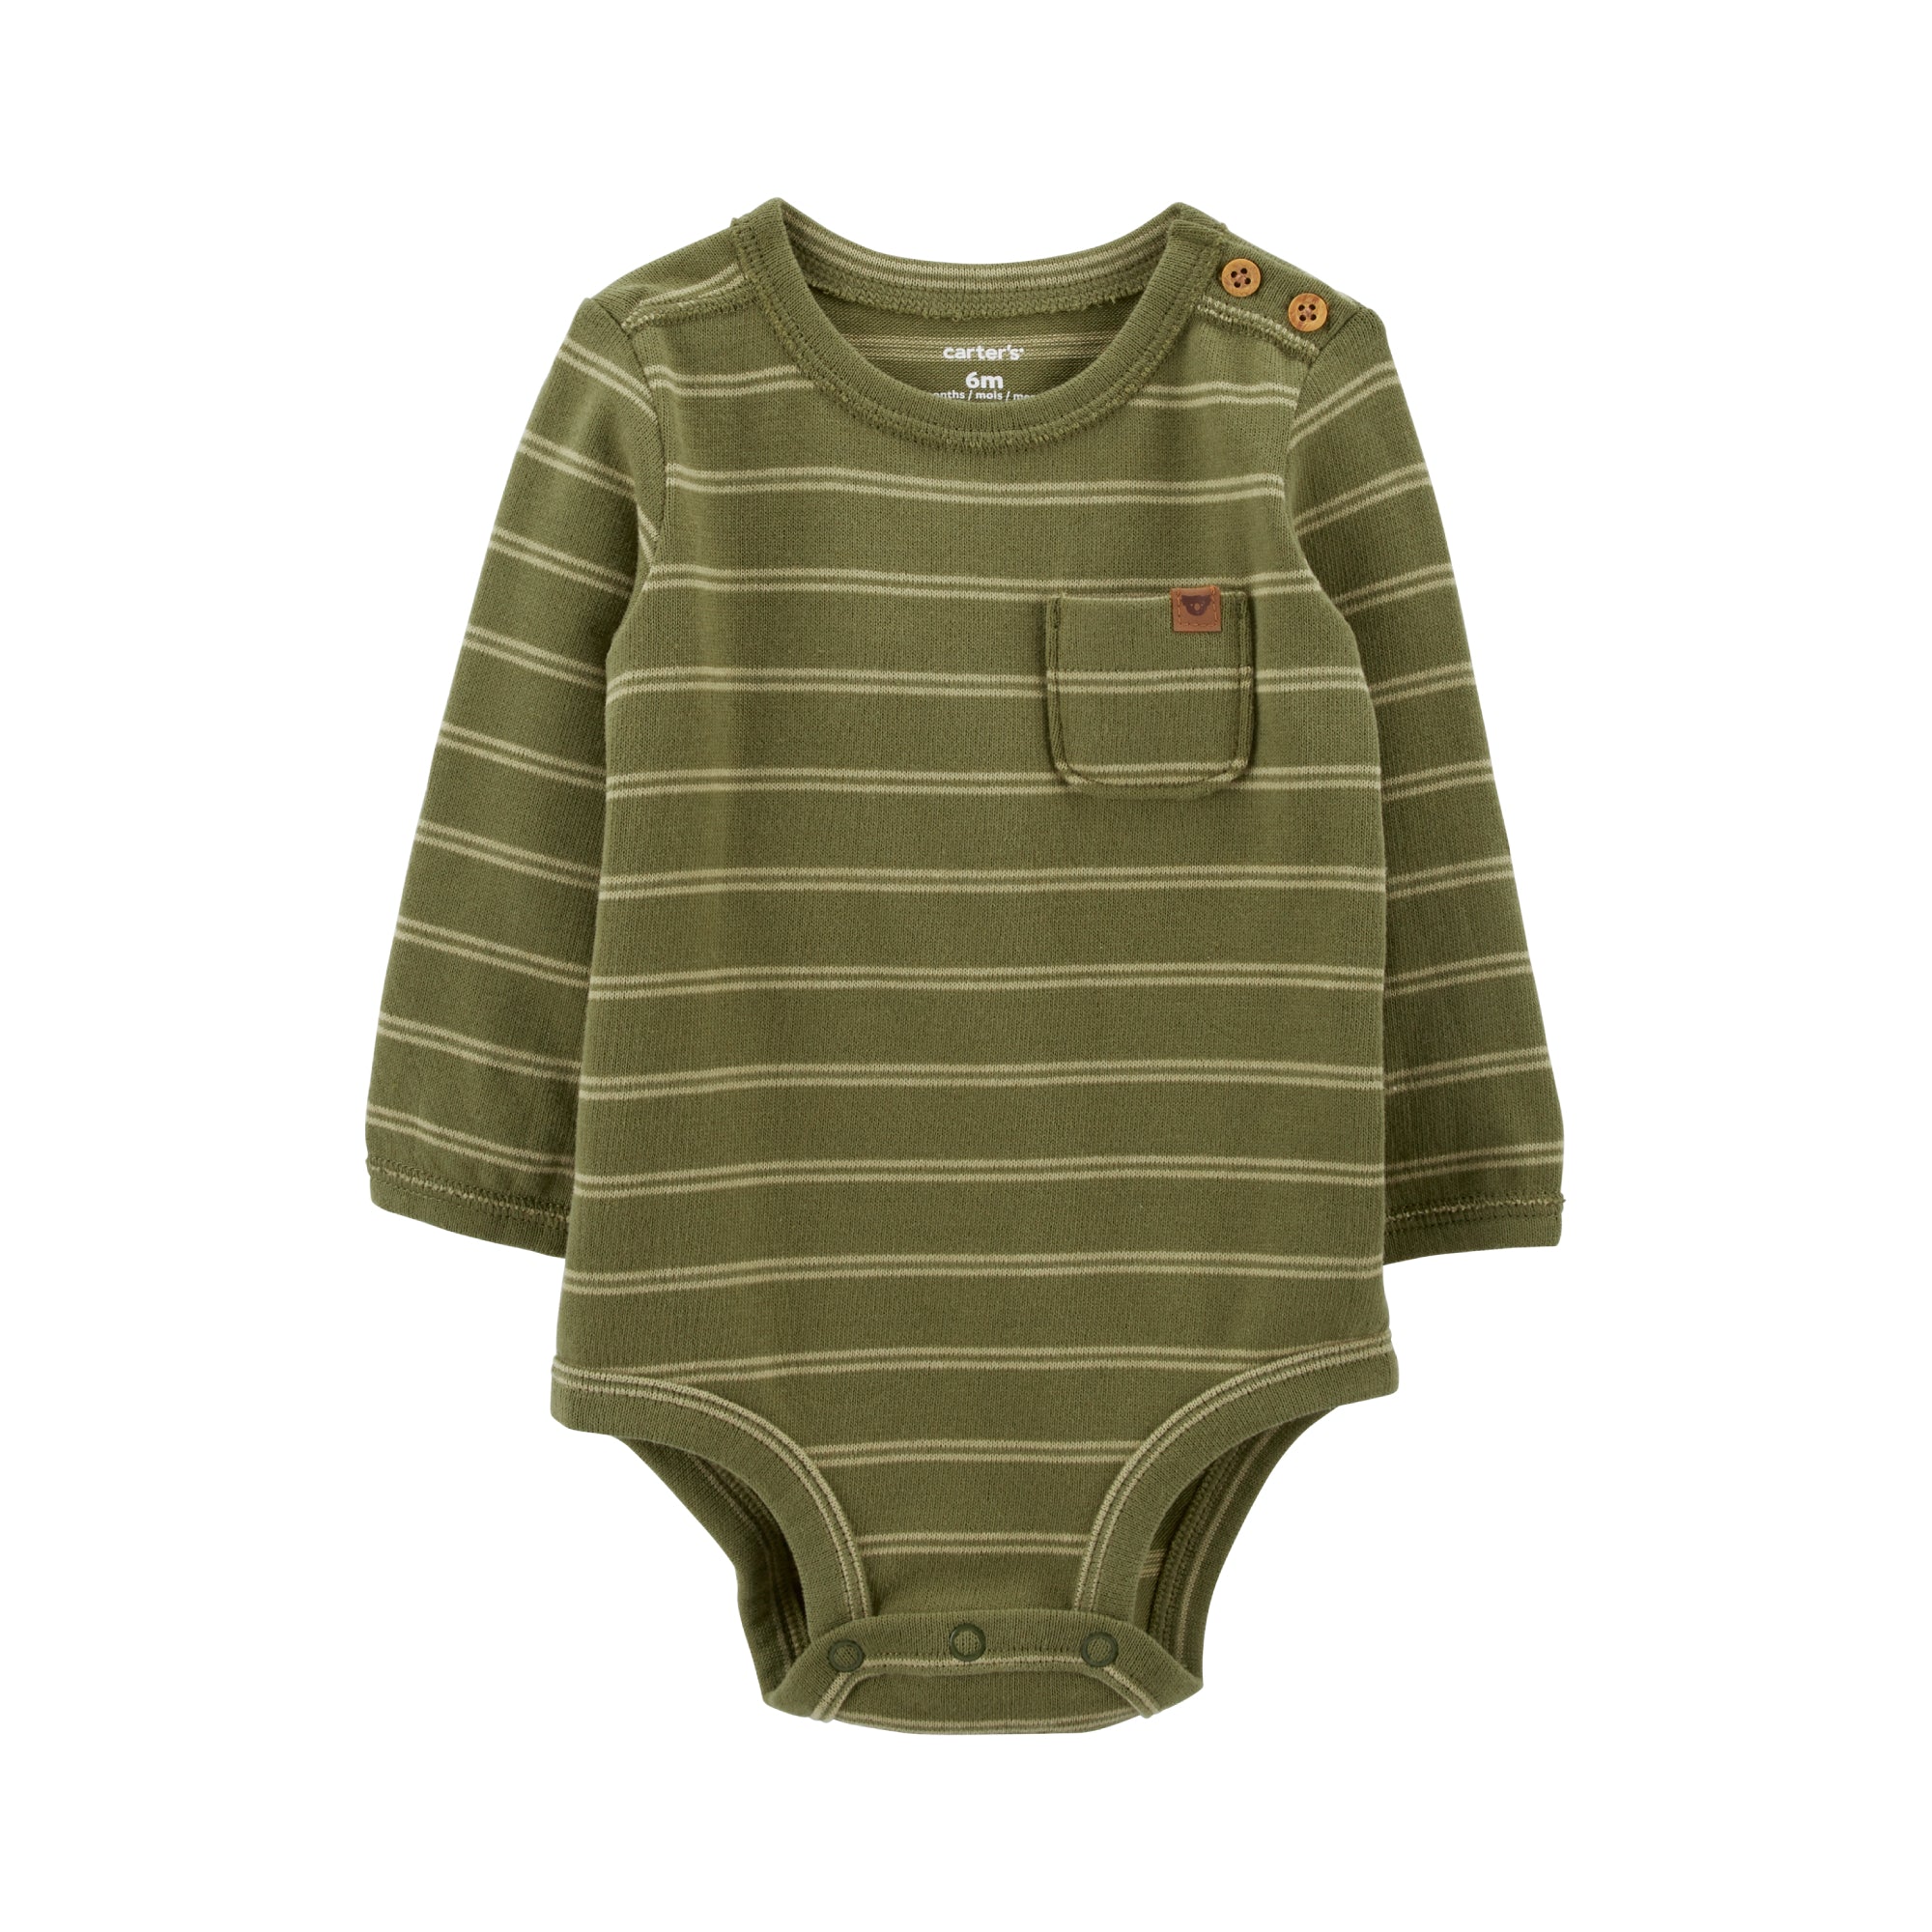 Carter's pastel green striped undershirt (6M-24M) – Carter's 